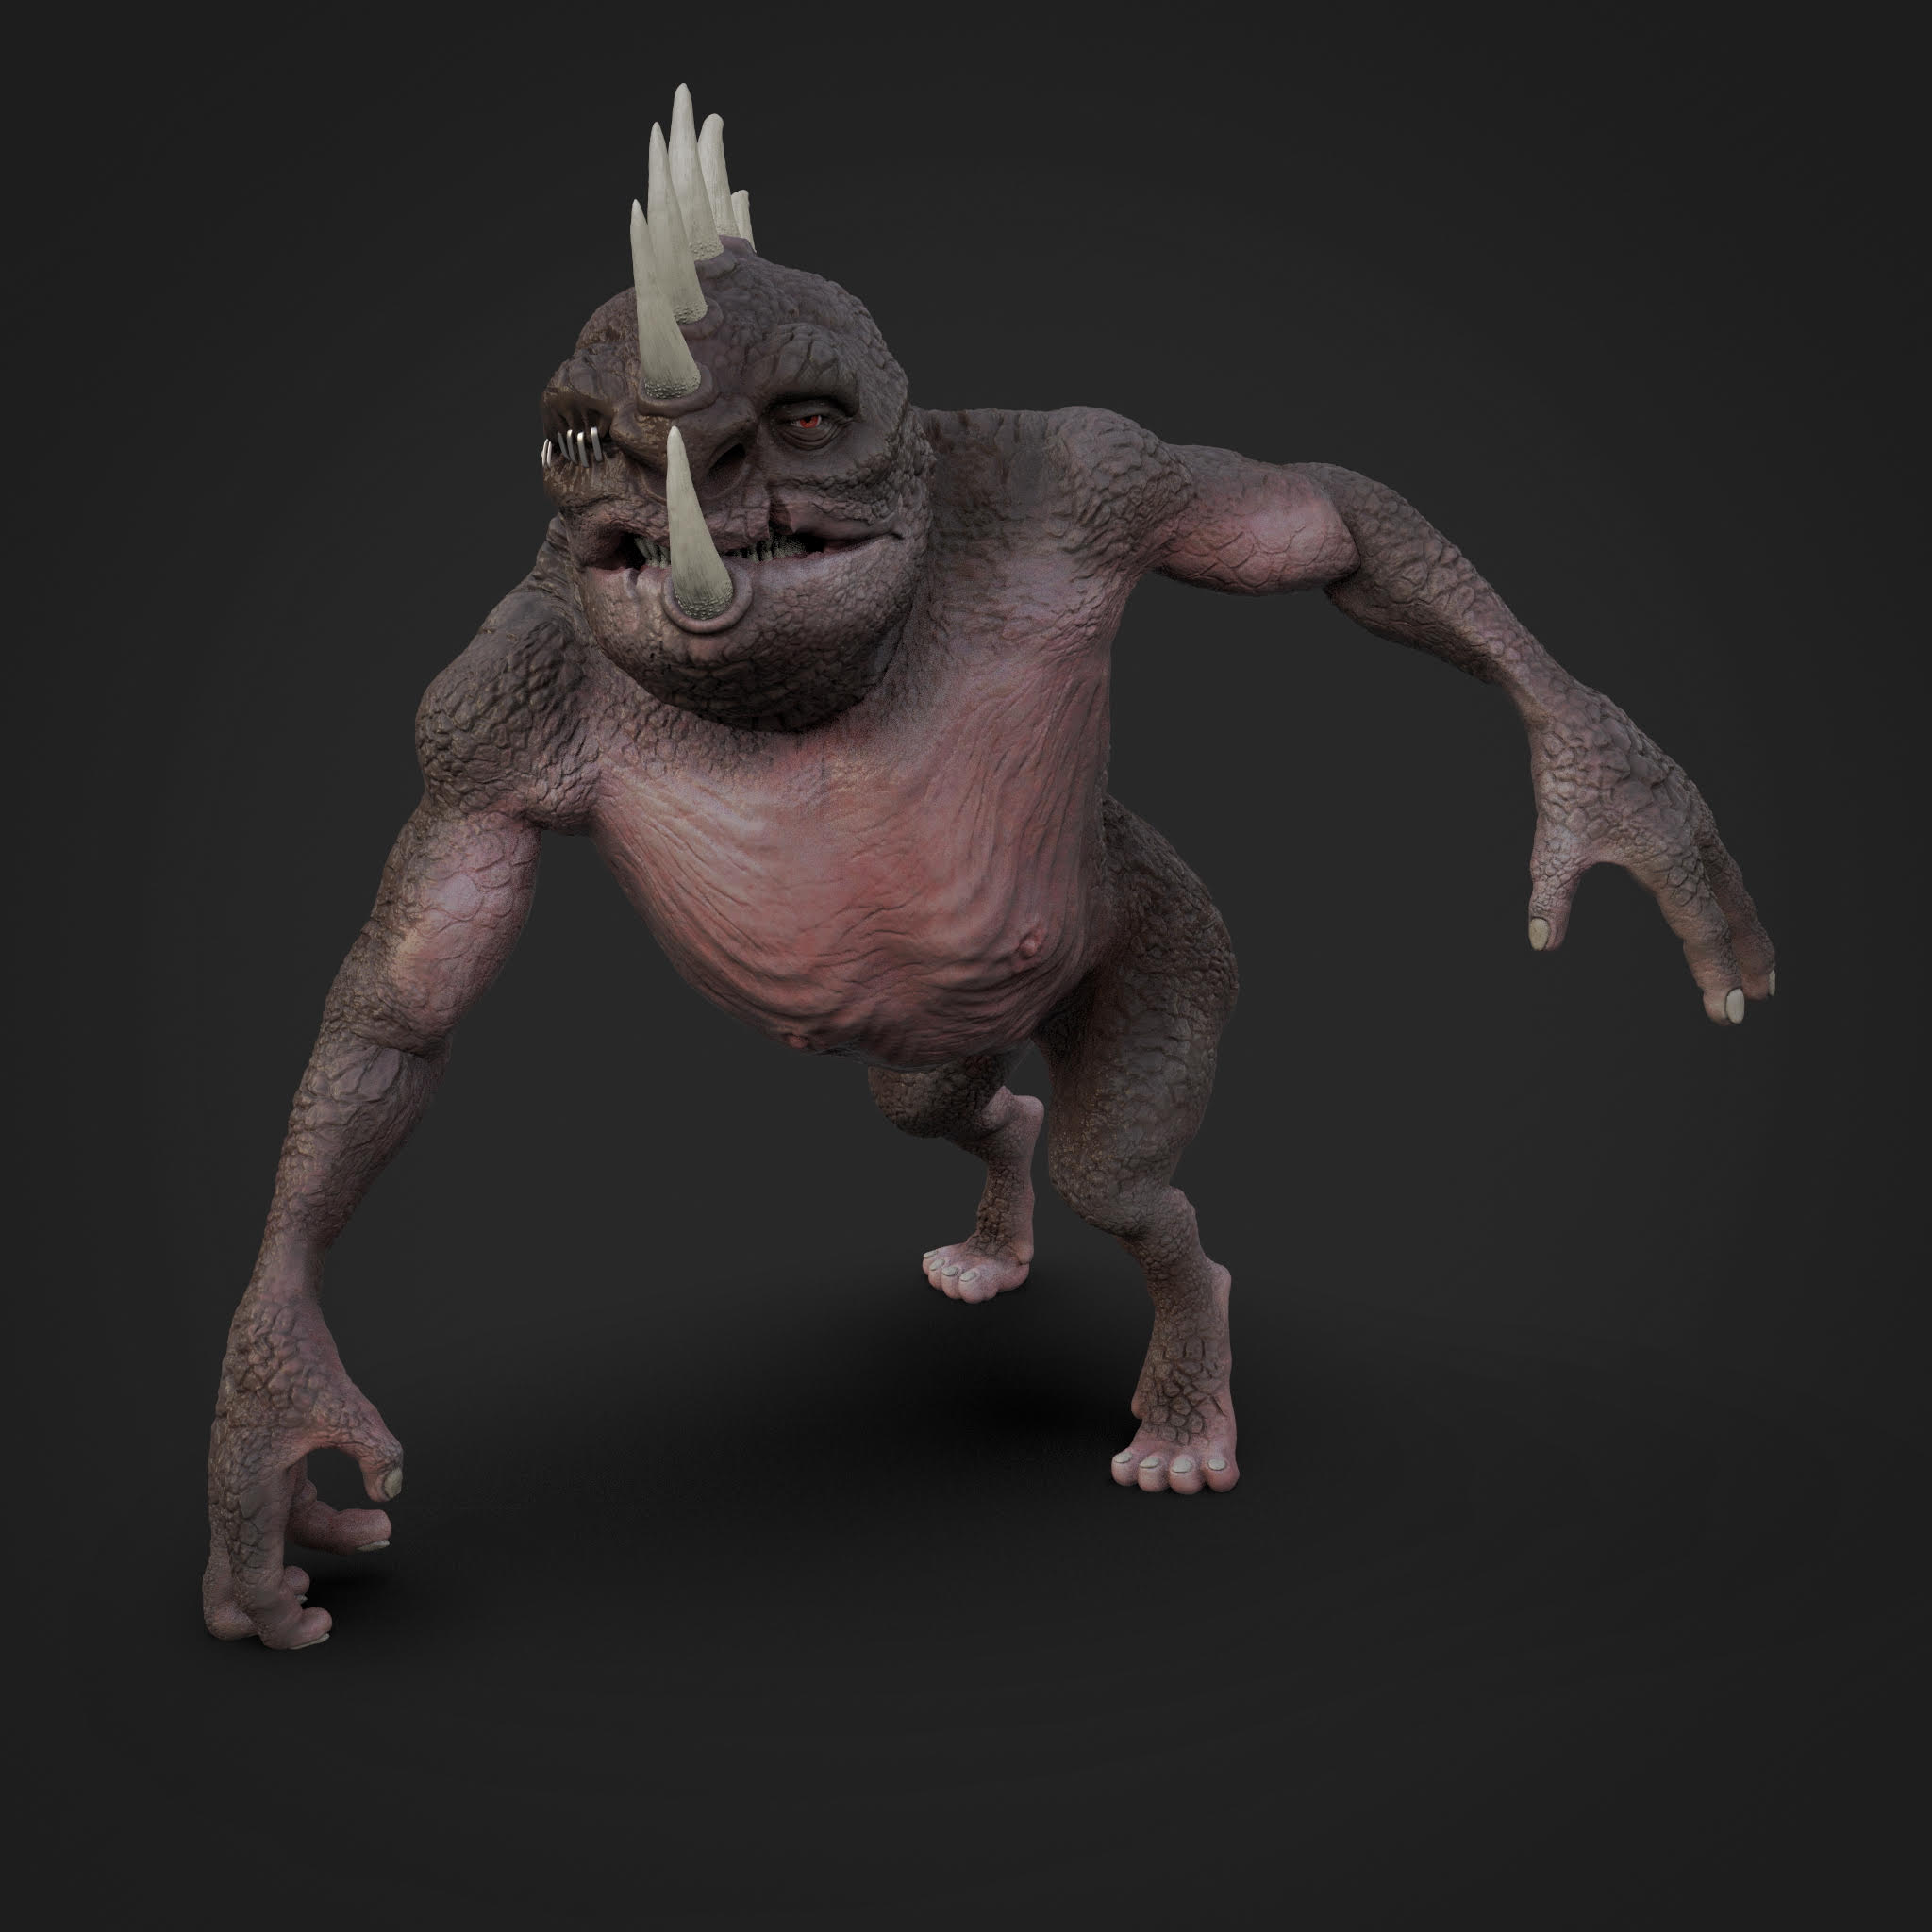 creative horned creature 3D animation